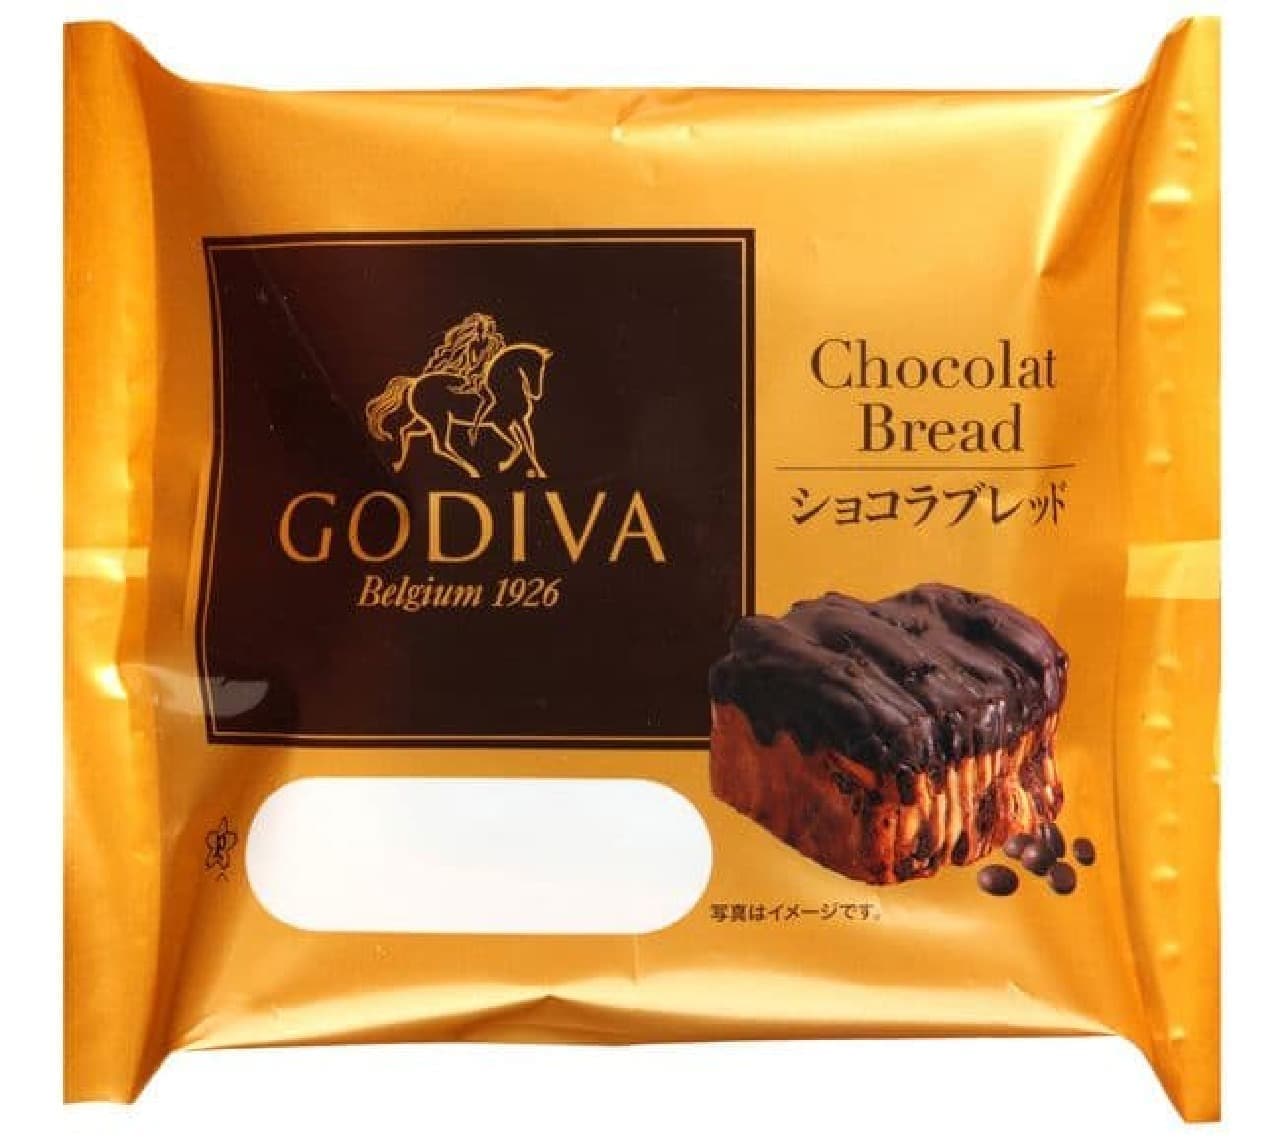 Godiva x Pasco "Chocolate Bread"